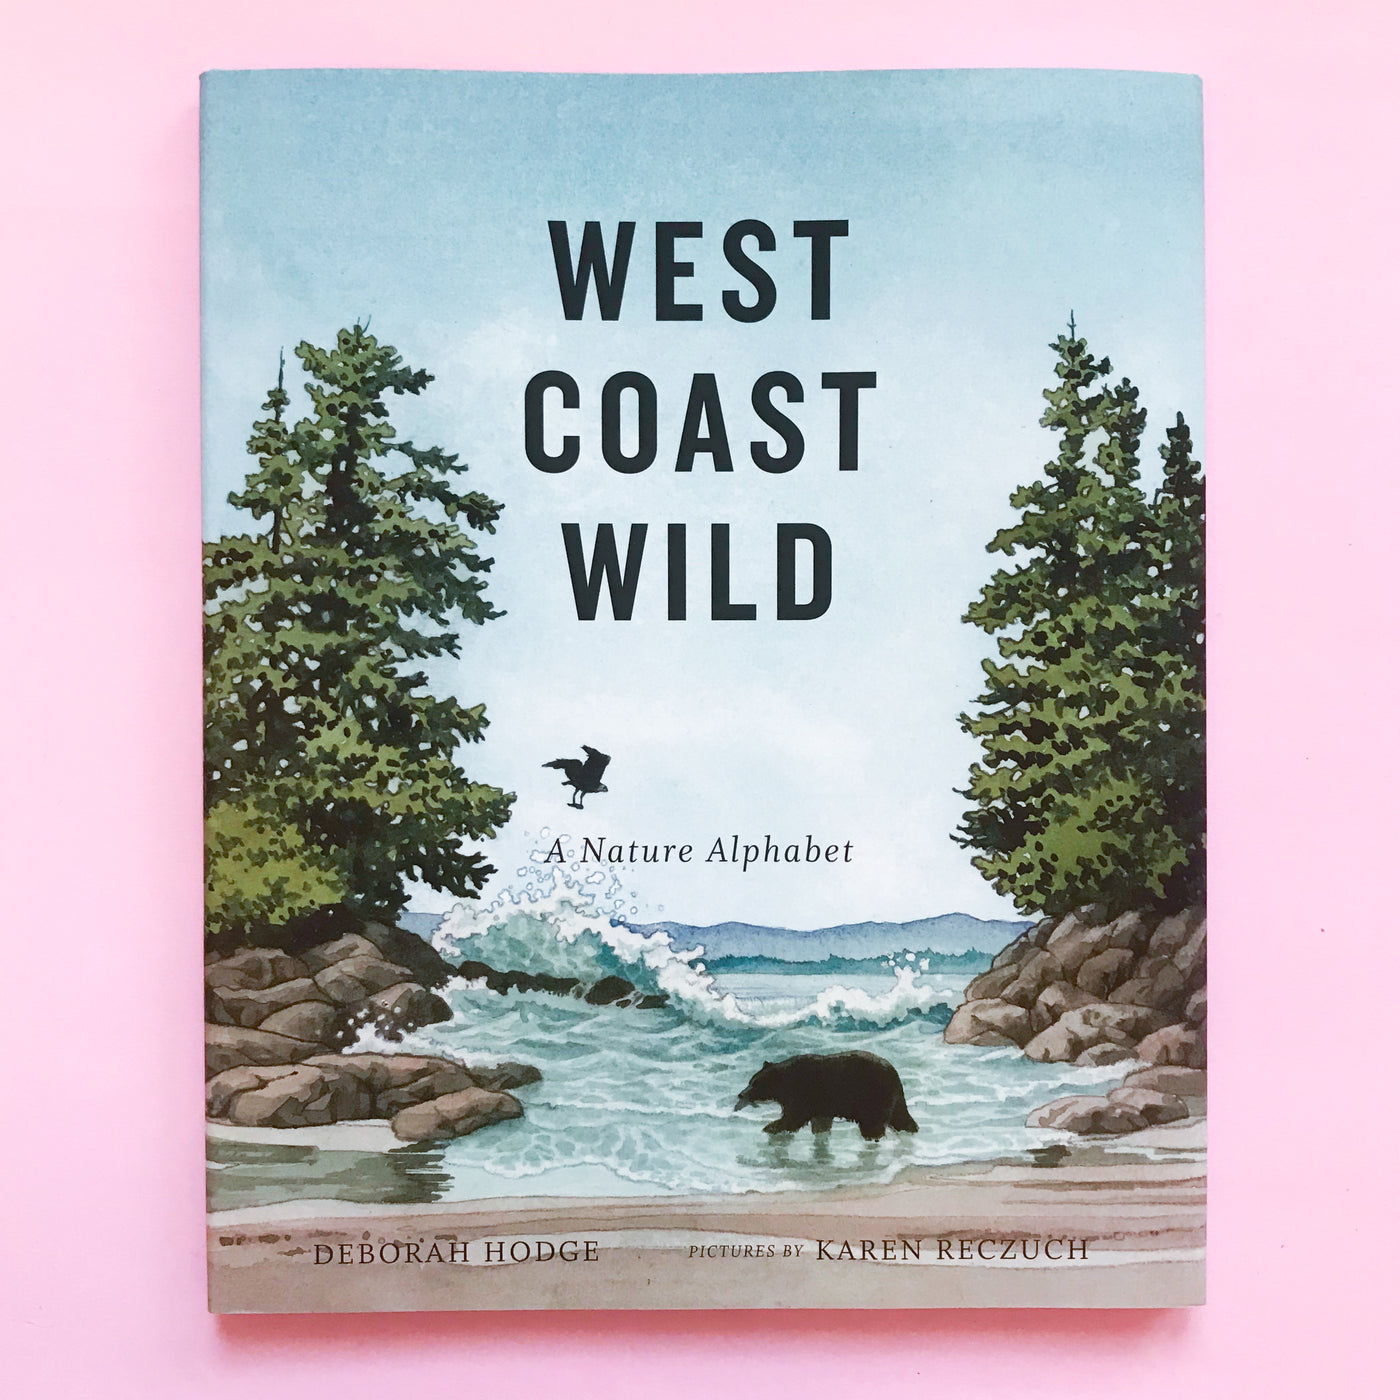 West Coast Wild: A Nature Alphabet by Deborah Hodge